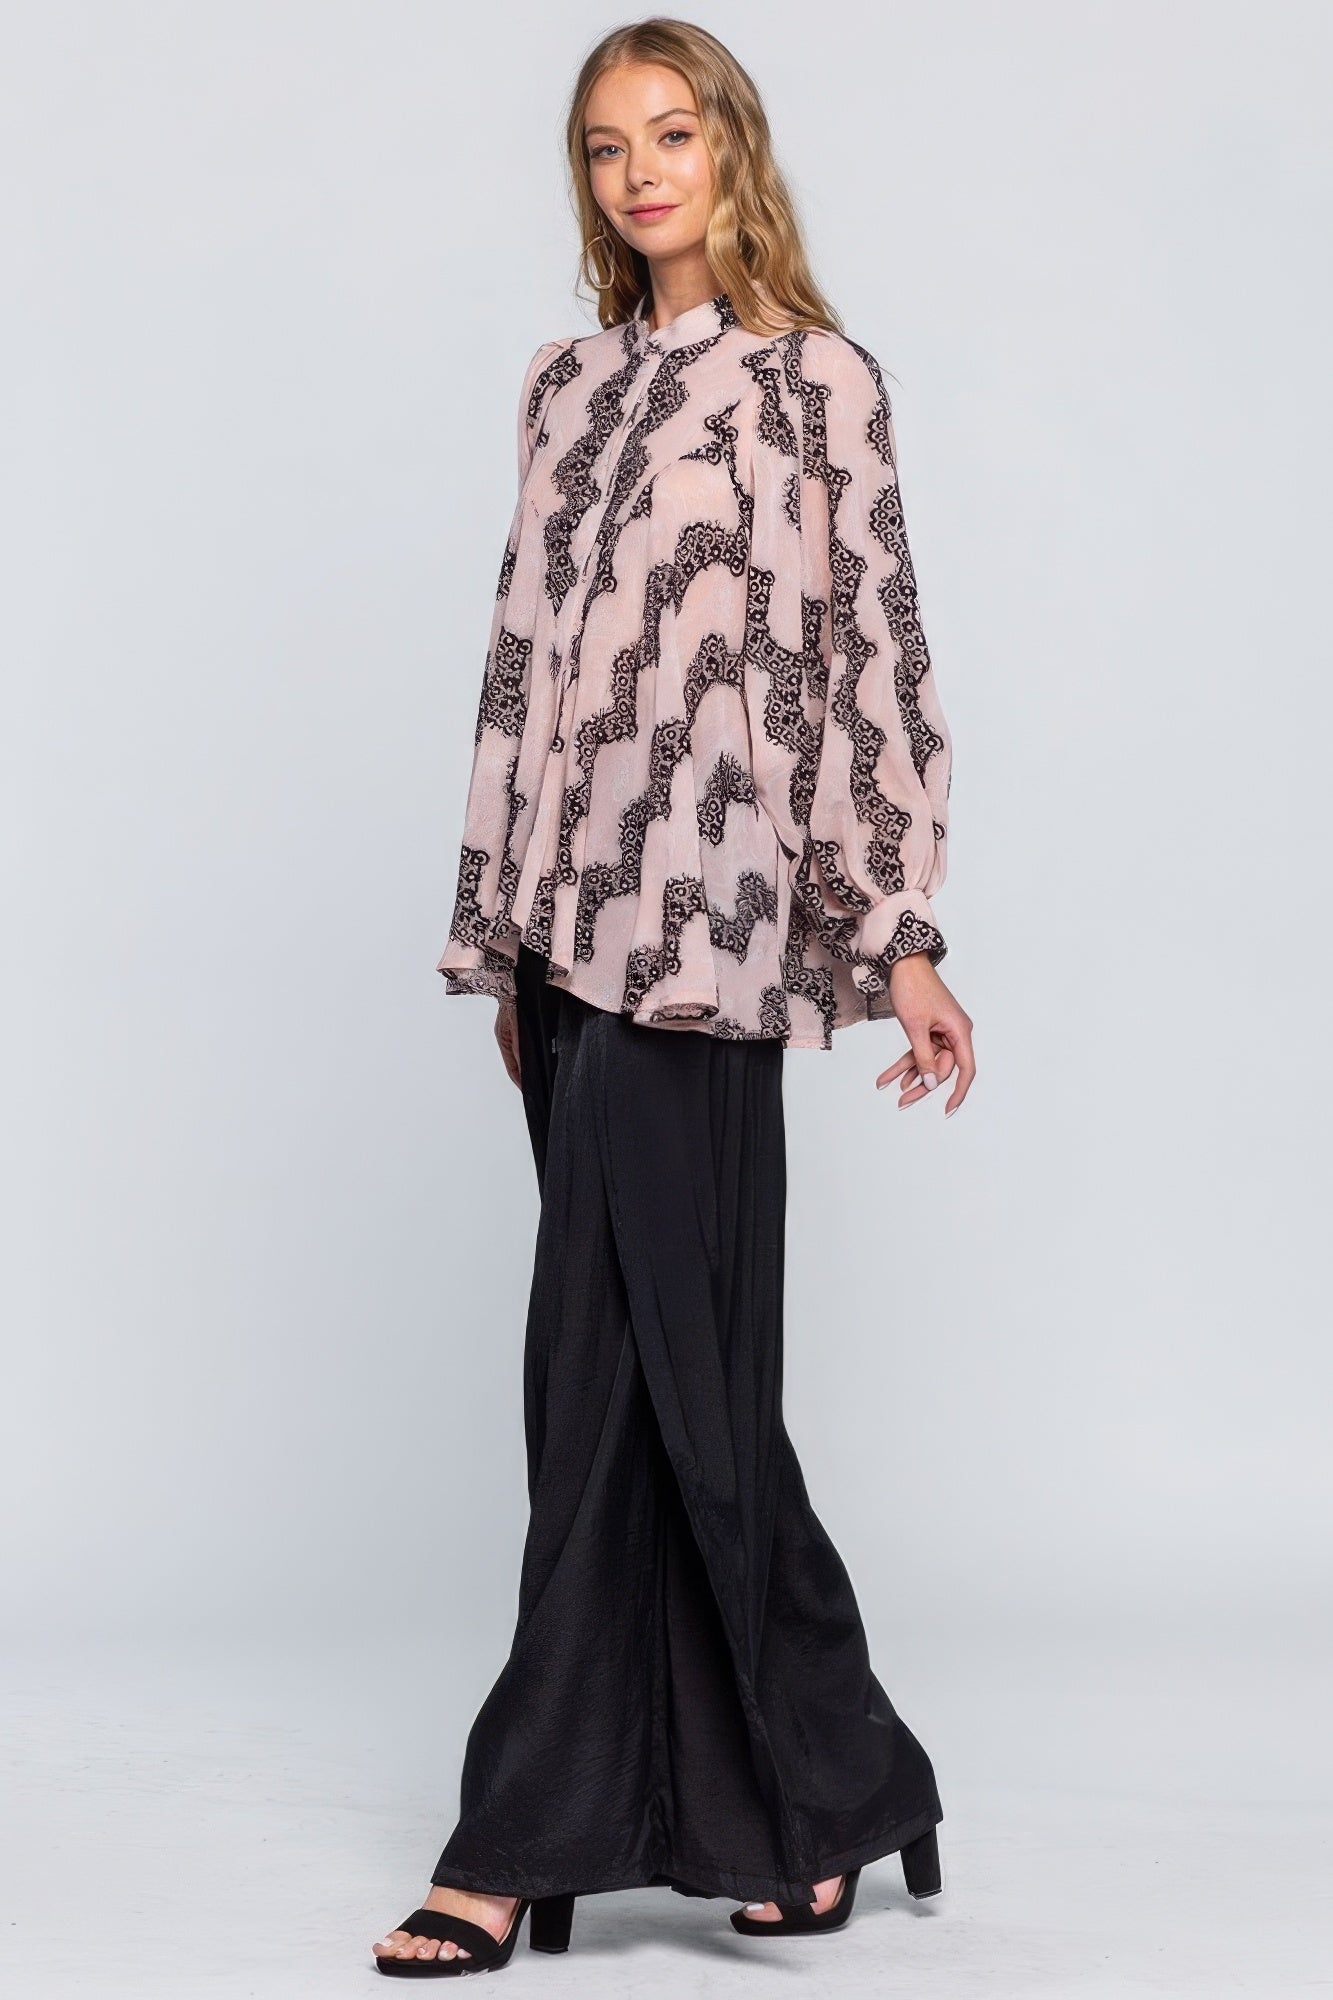 See Through Shirt With Lace Detail - Tigbuls Variety Fashion